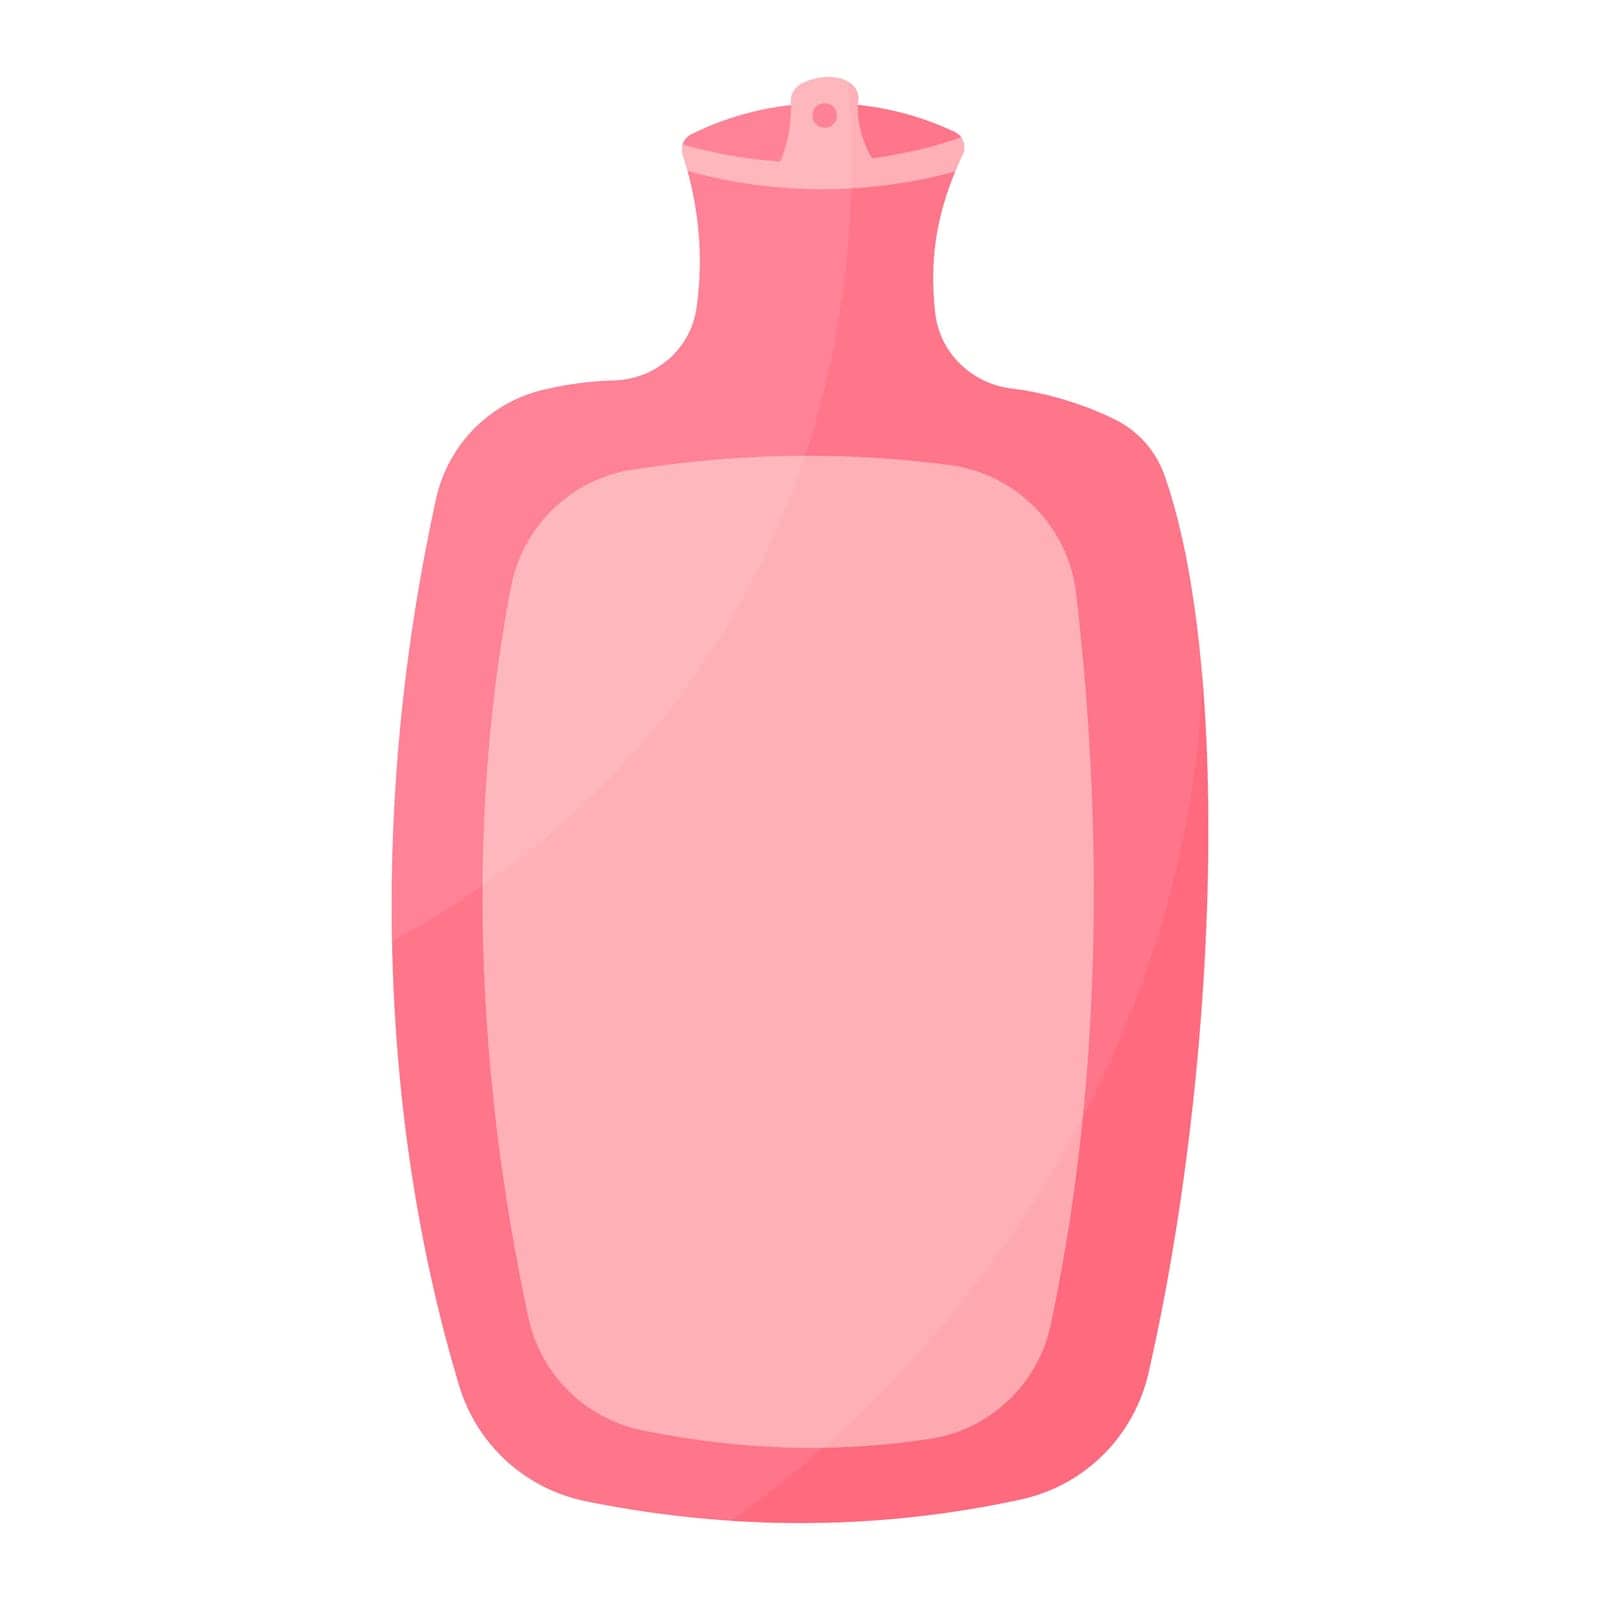 hot water bottle menstruation spasm woman period icon element vector illustration